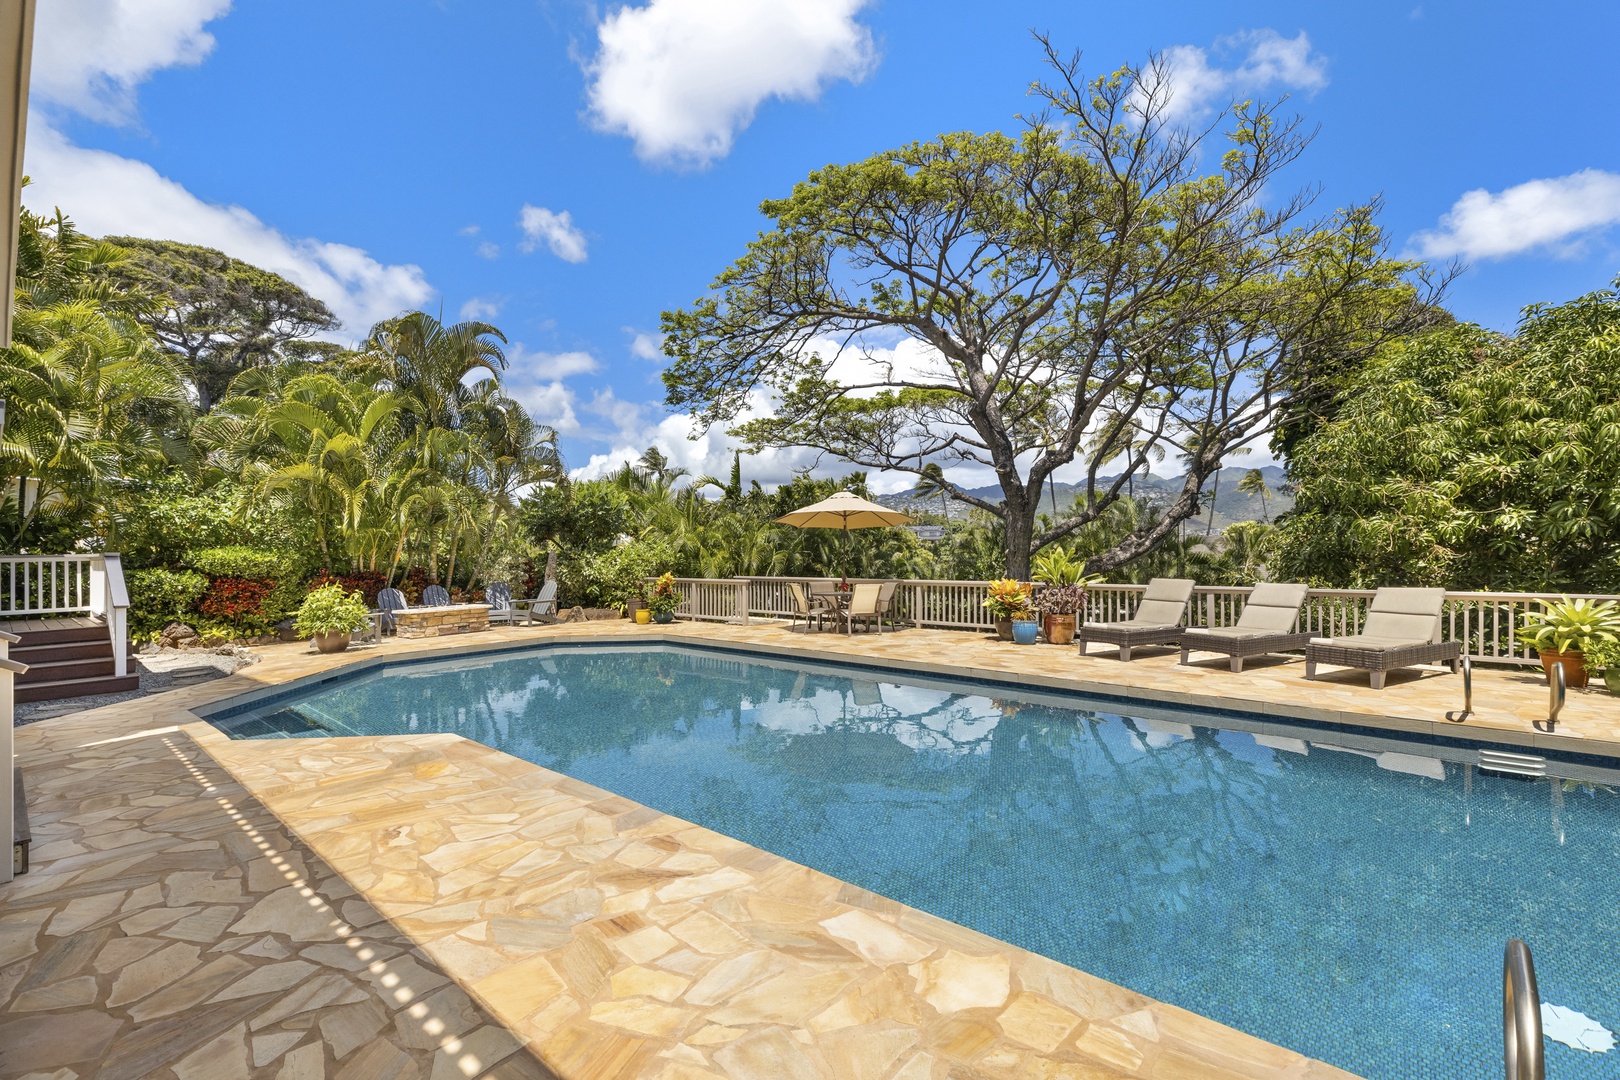 Honolulu Vacation Rentals, Hale Le'ahi* - Take a dip or lounge poolside